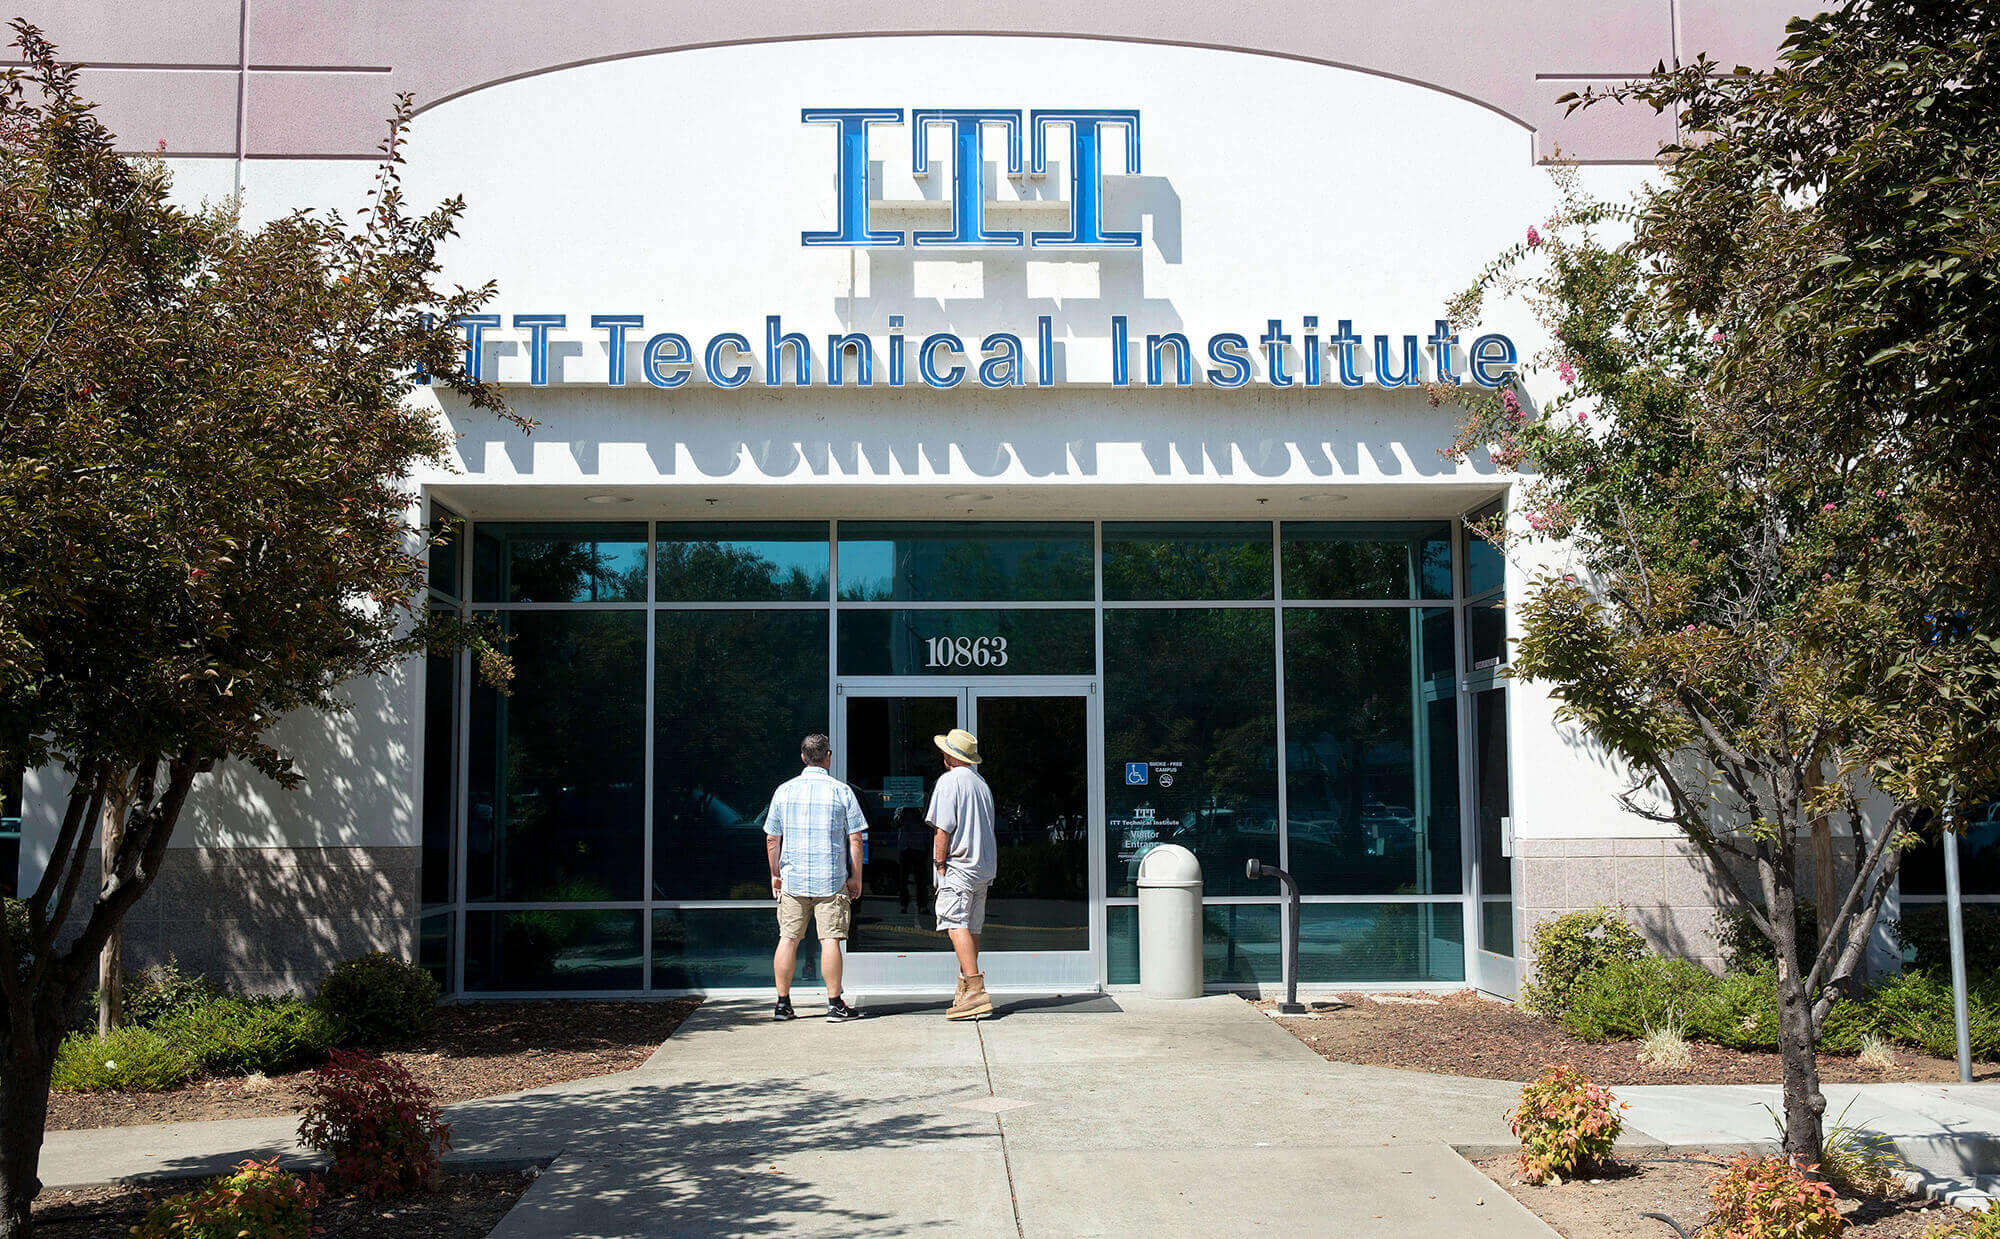 Image of ITT Tech campus building